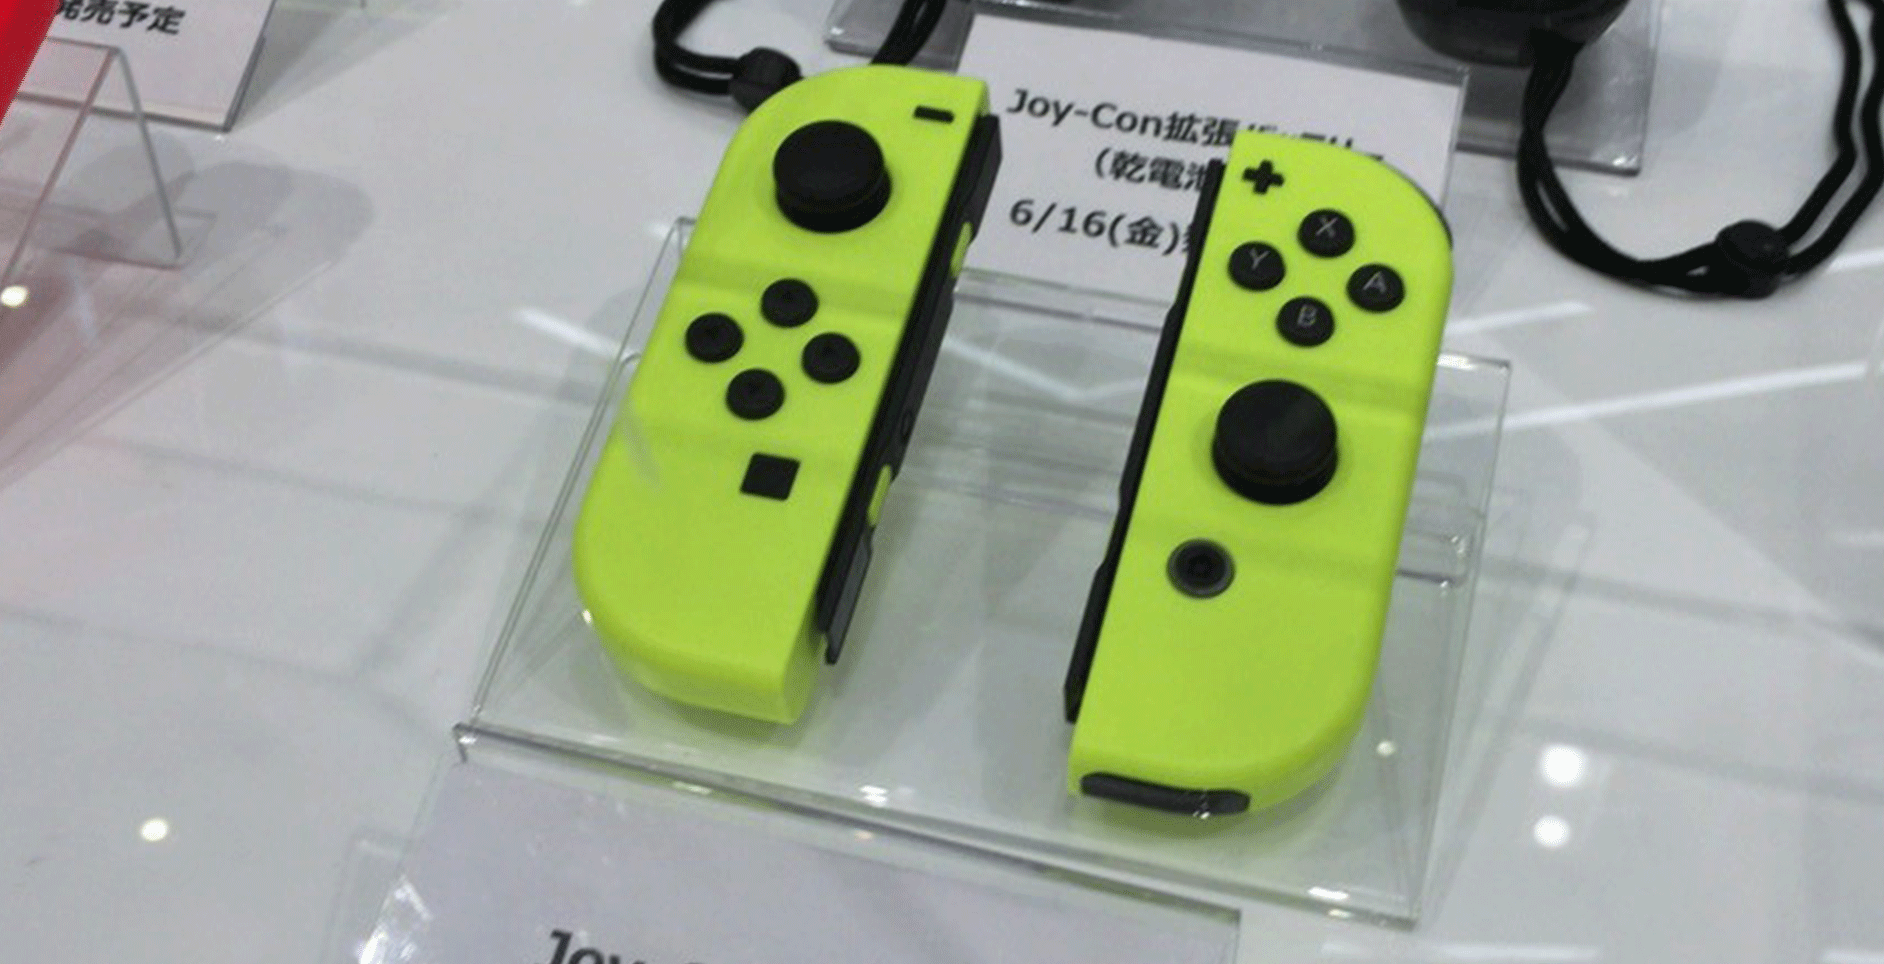 yellow switch joycons